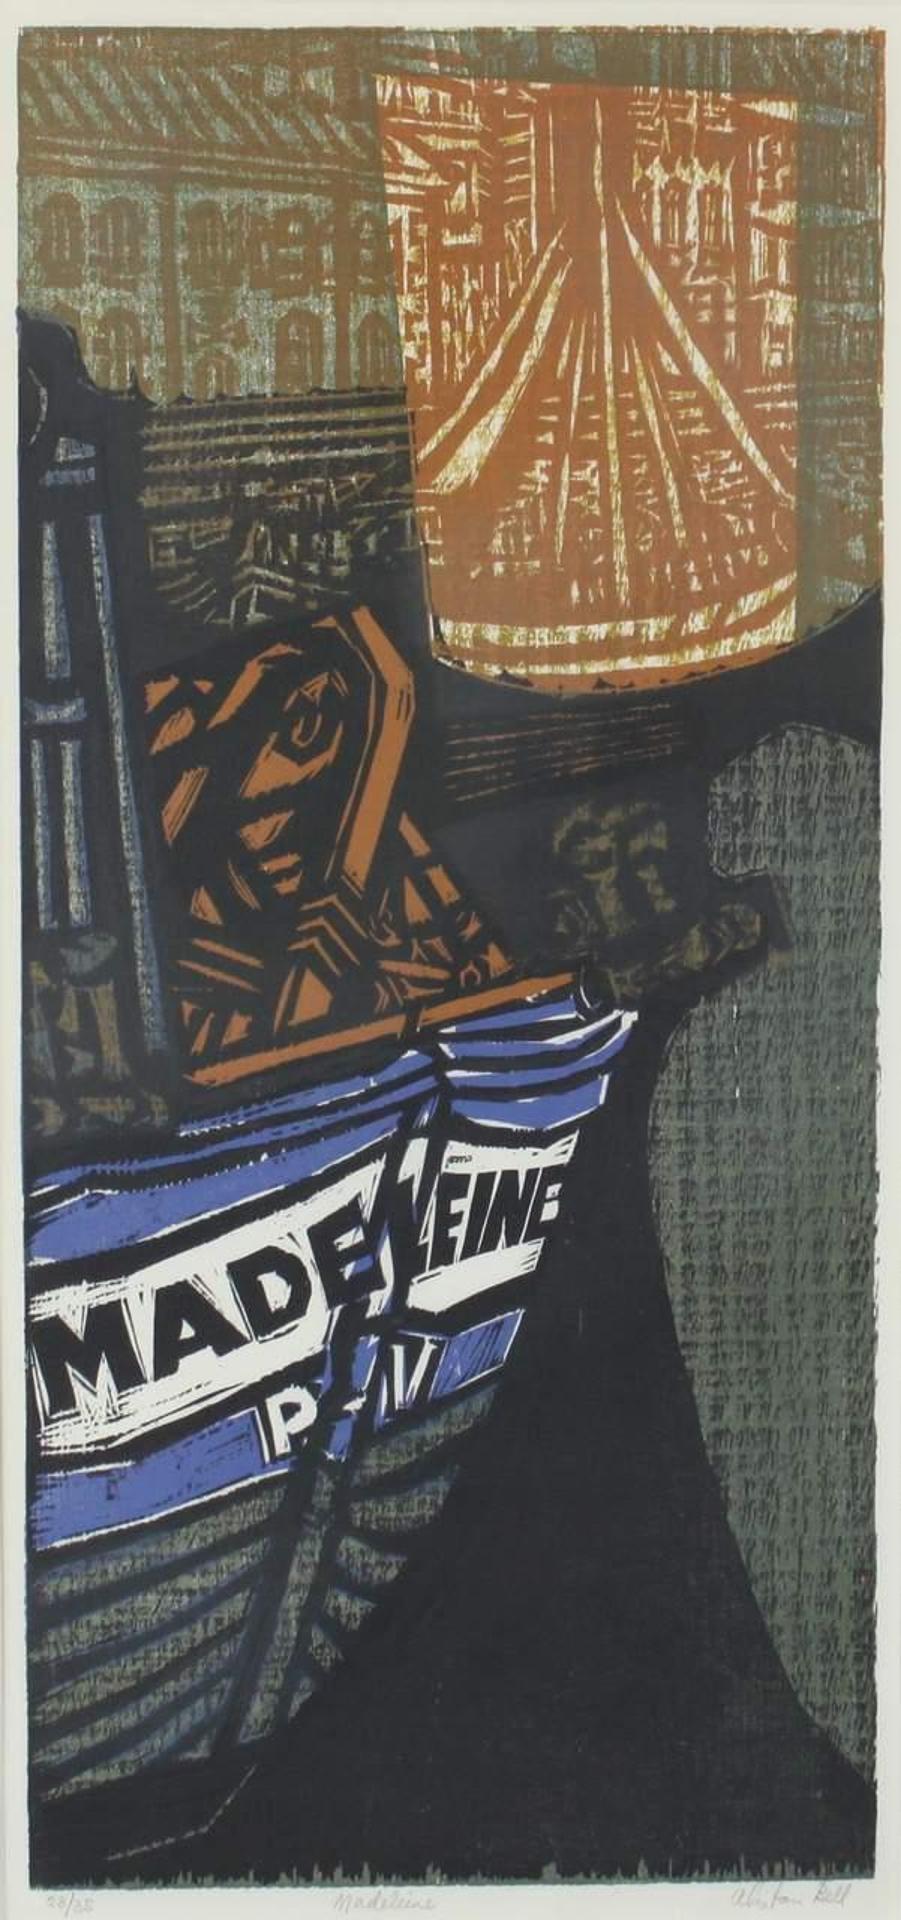 Alistair Macready Bell (1913-1997) - Madeleine